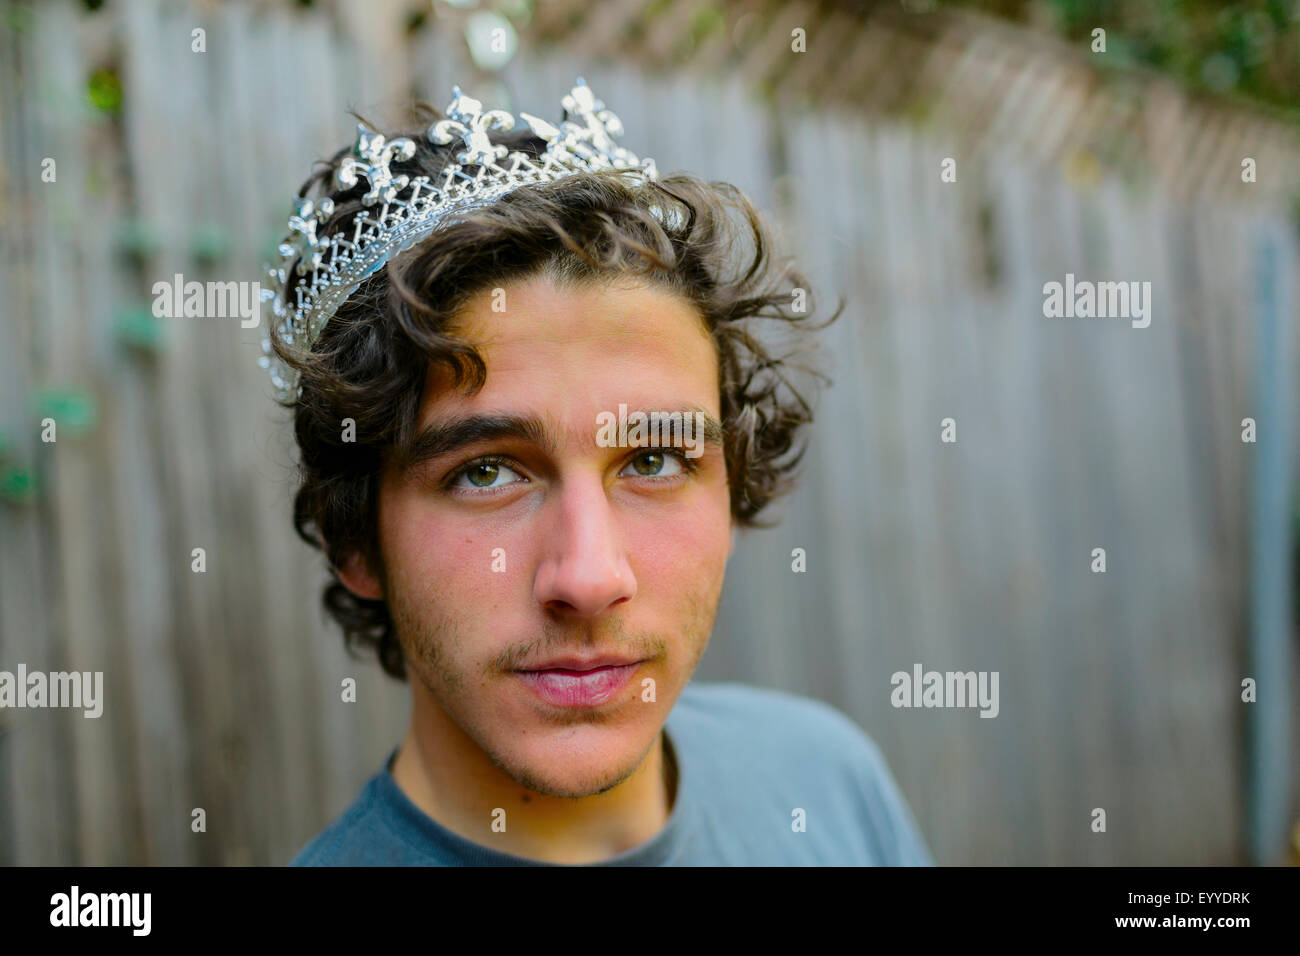 Hispanic man wearing crown in backyard Stock Photo